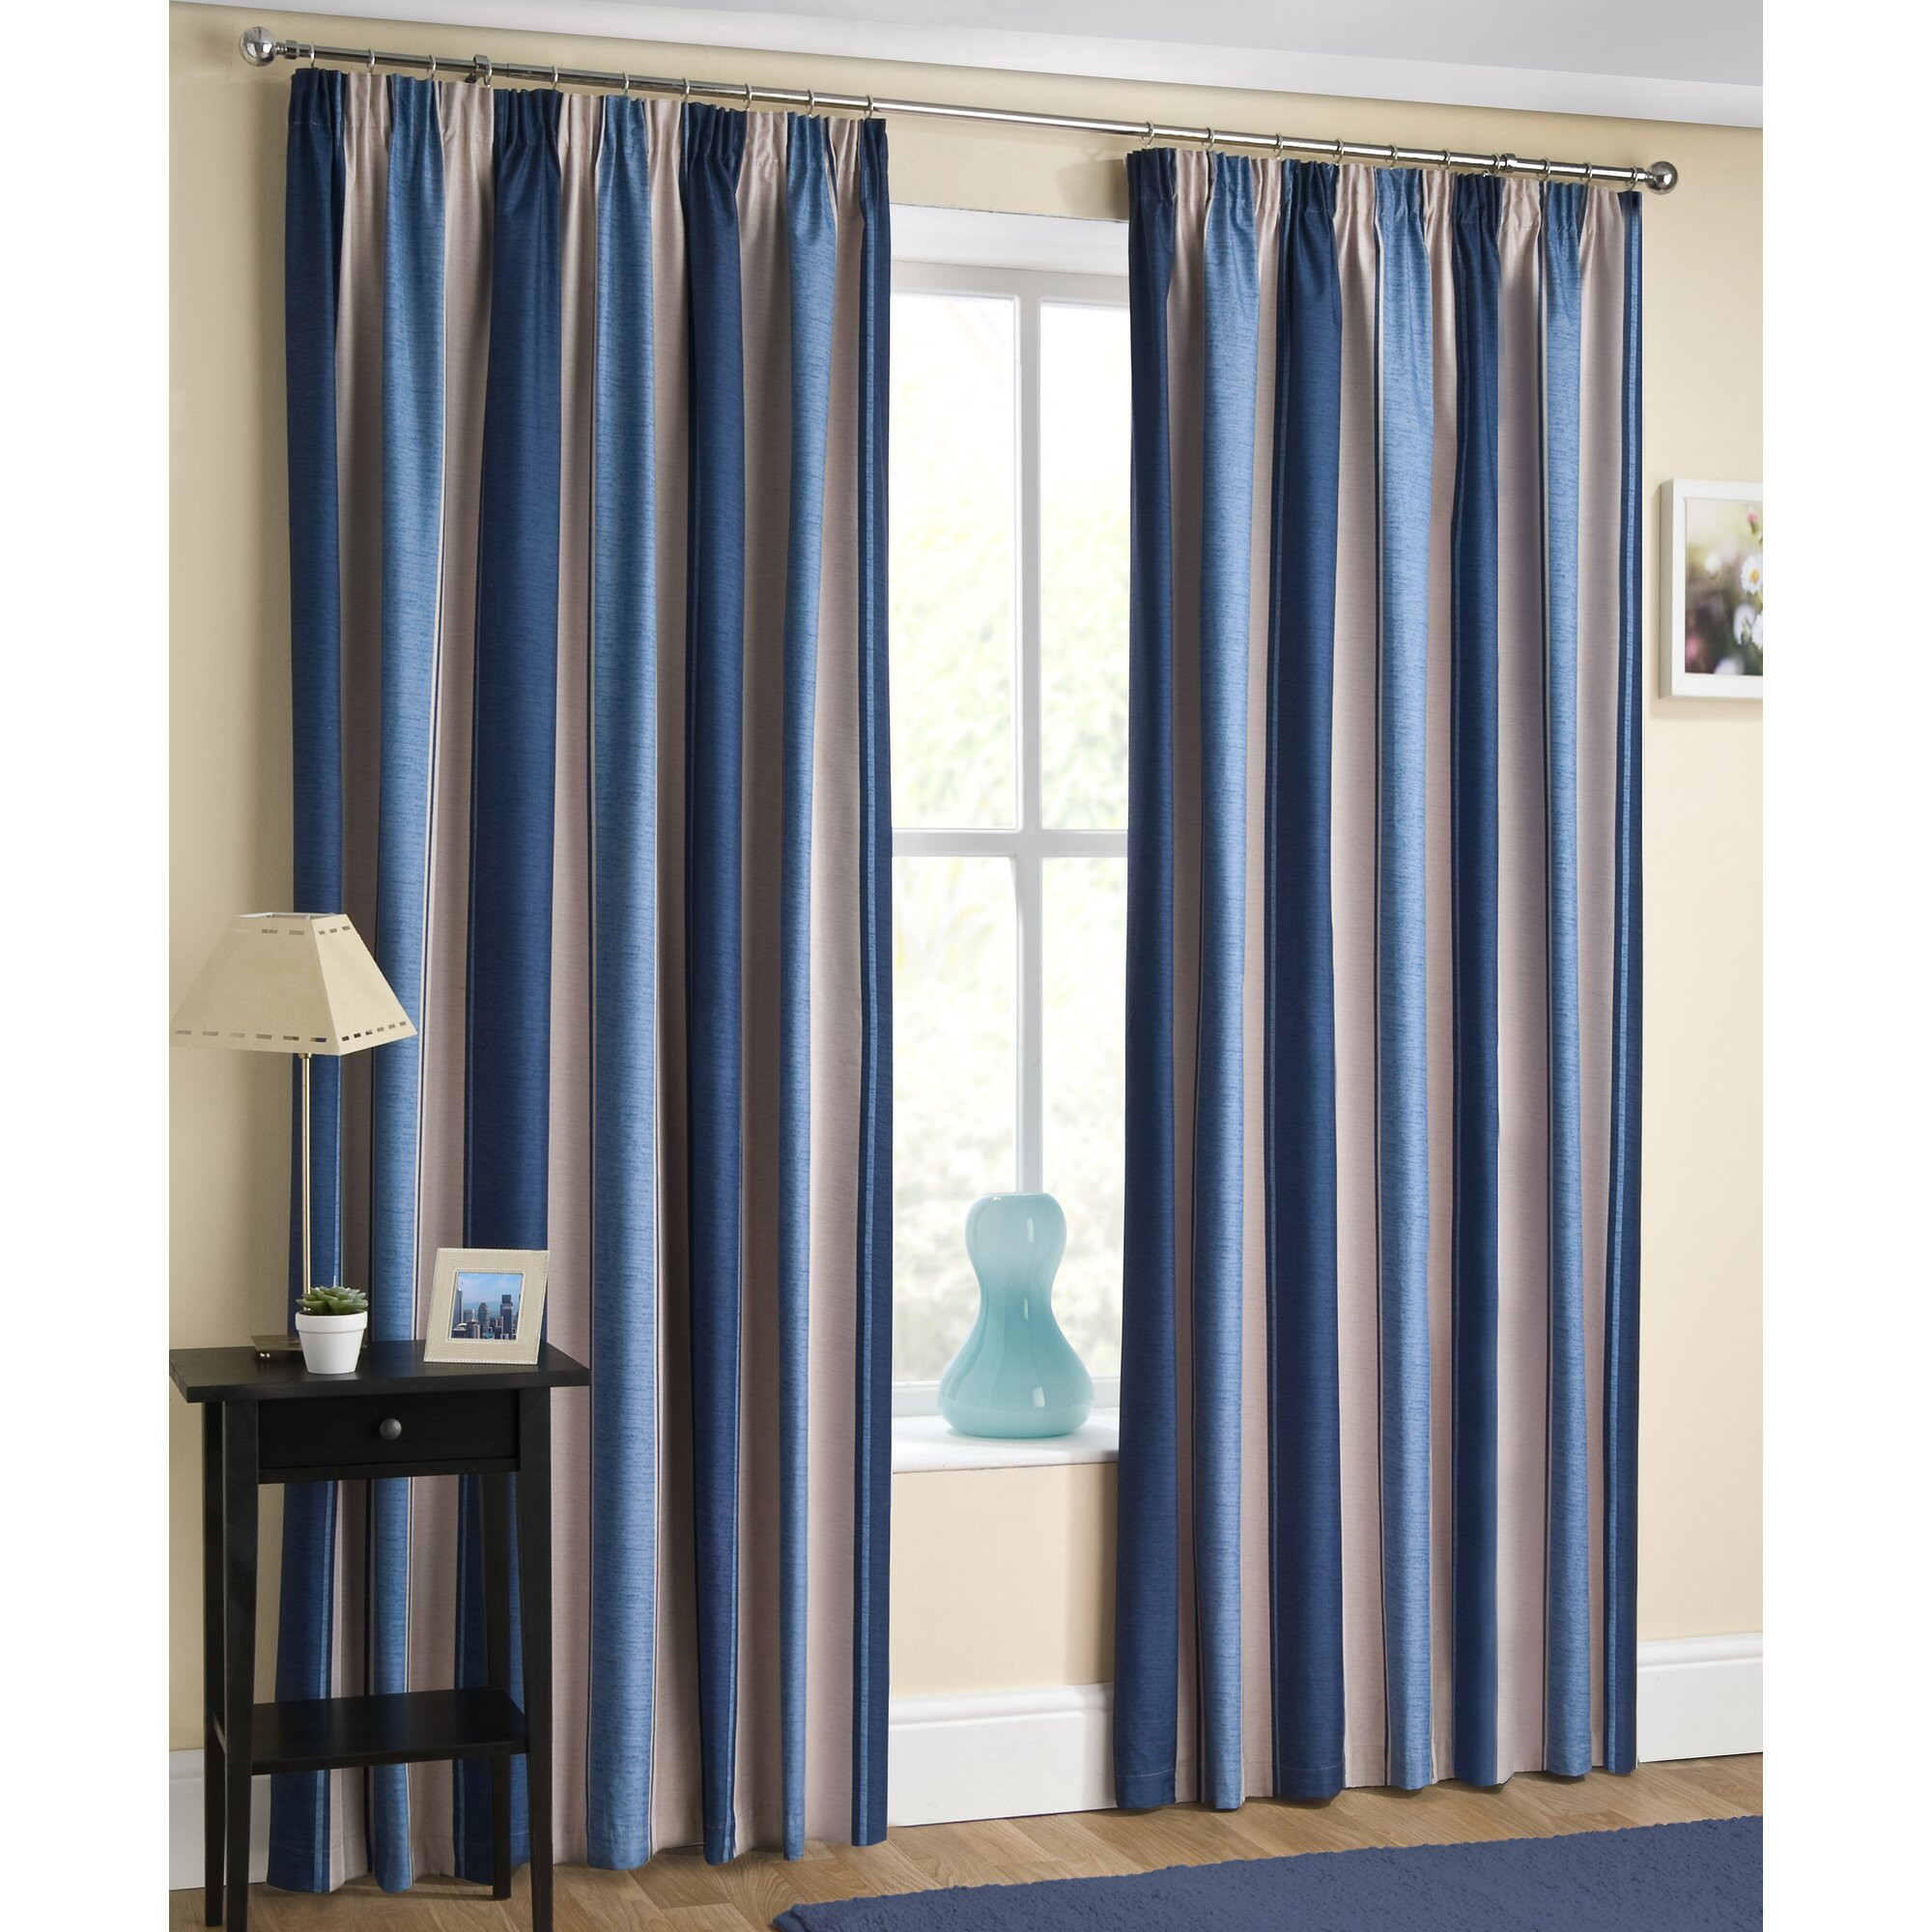 Wayfair Living Room Curtains
 Tyrone Textiles Enhanced Living Blackout Thermal Curtain